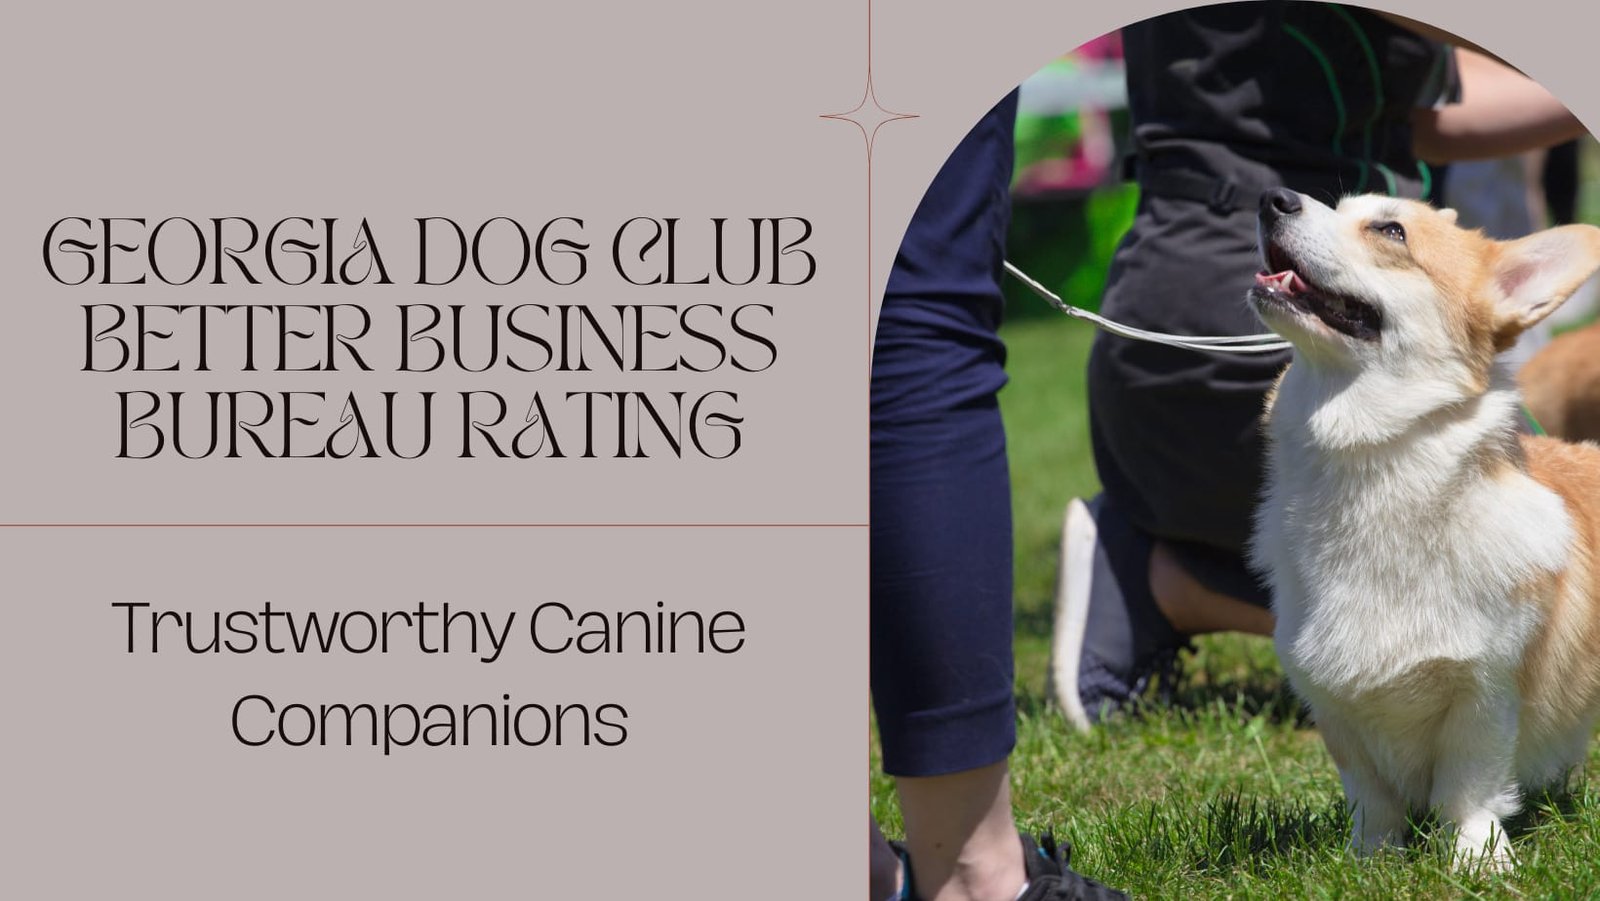 Georgia Dog Club Better Business Bureau Rating: Trustworthy Canine Companions